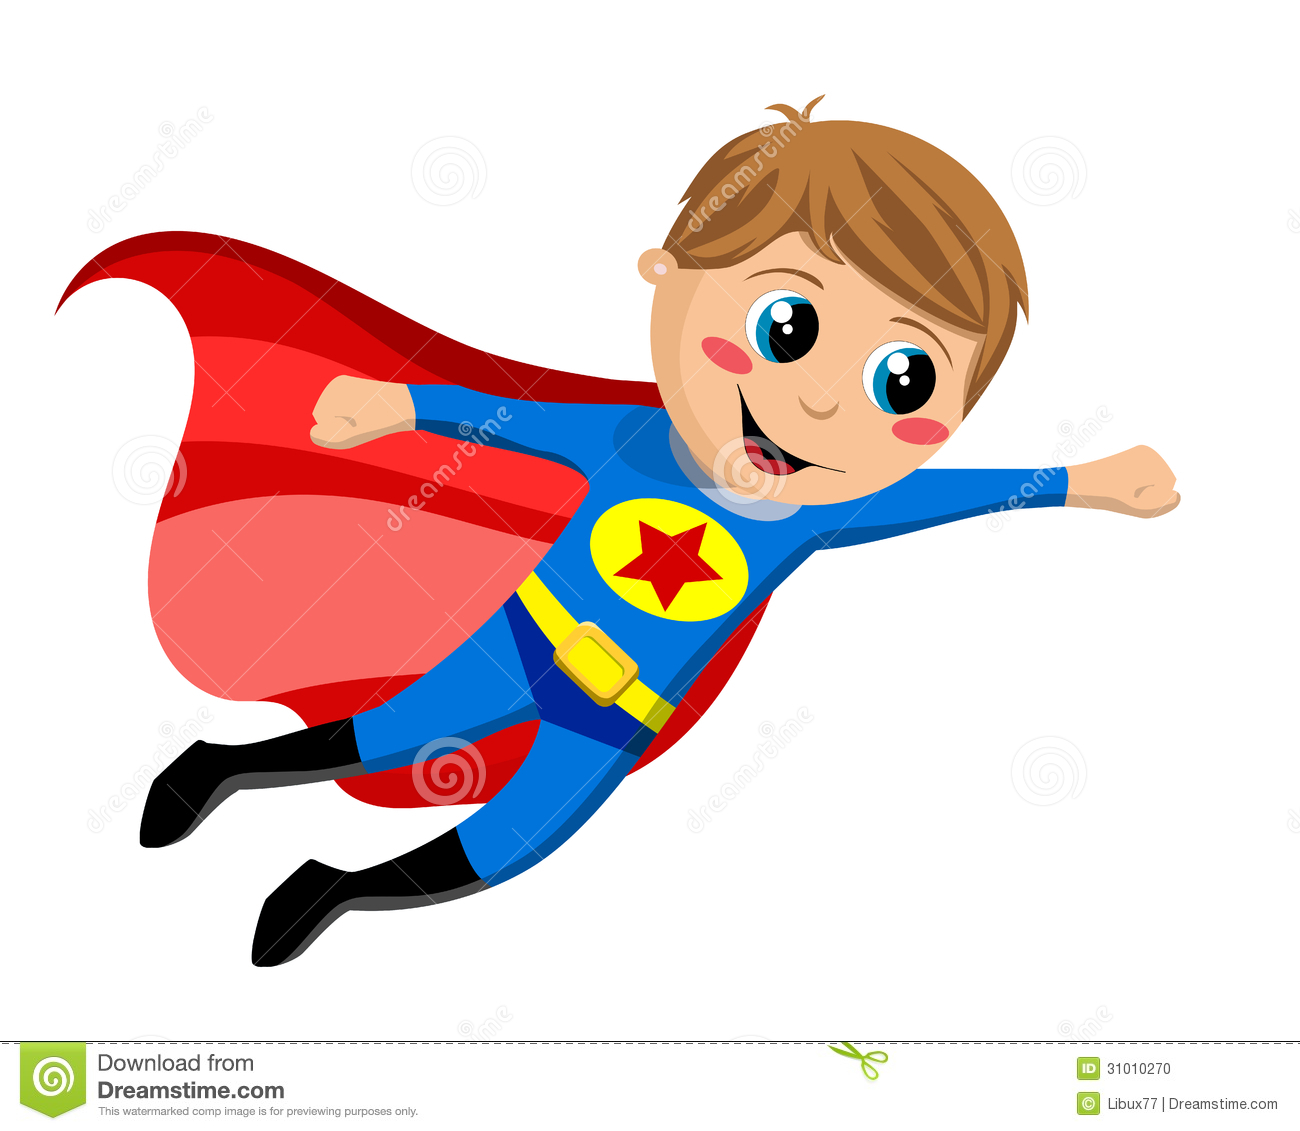 Boy Superhero Holding a Blank